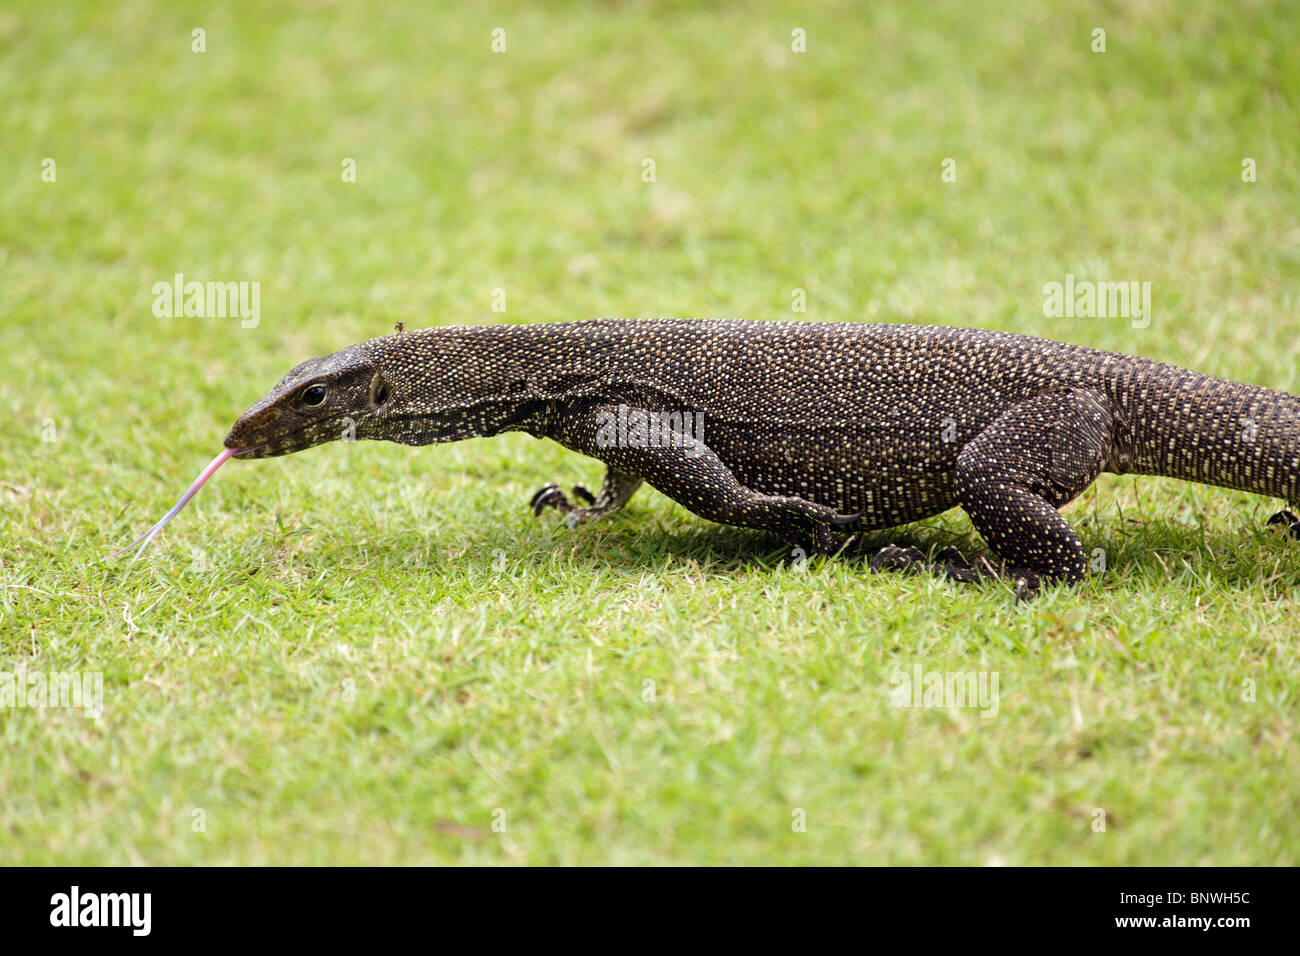 big monitor lizard varan walking on grass, malaysia Stock Photo